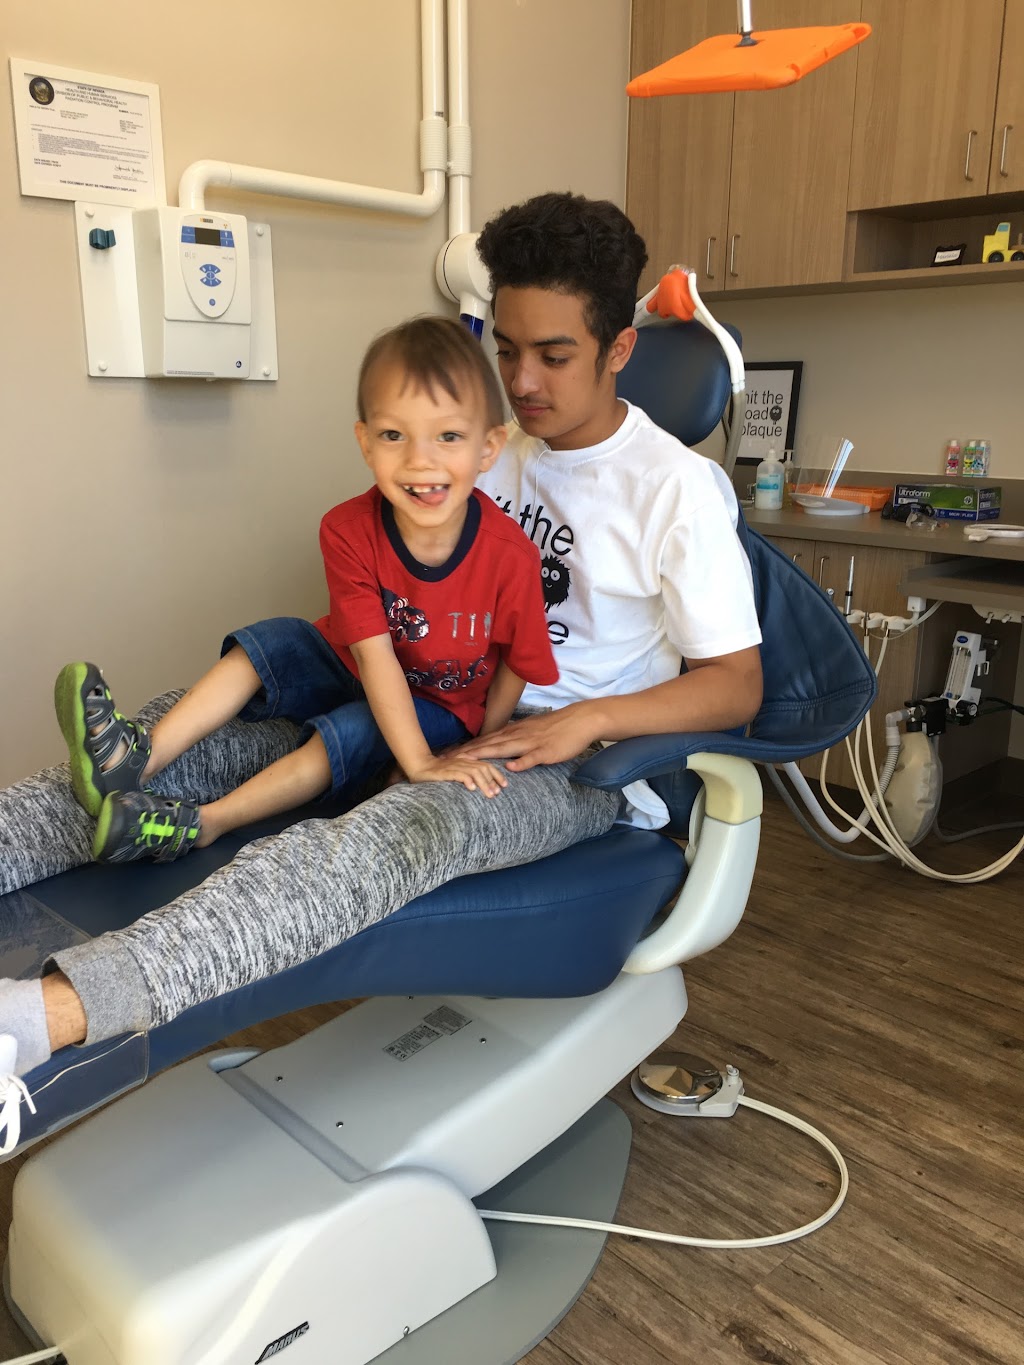 Zeff Pediatric Dentistry | 65 Foothill Rd Ste 1, Reno, NV 89511, USA | Phone: (775) 851-1770